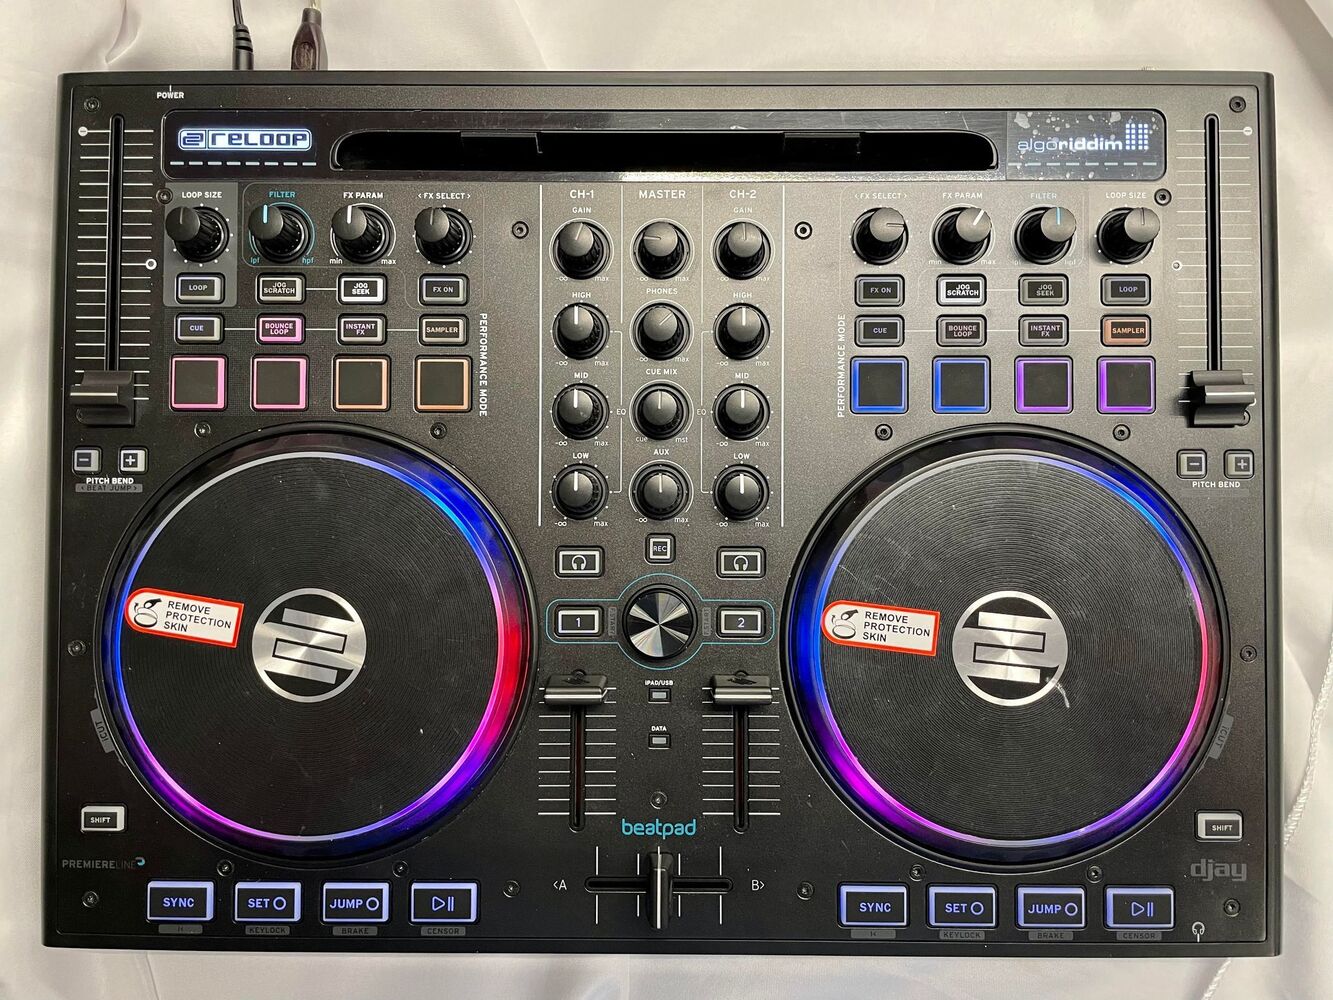 Algoriddim Reloop Beatpad - DJ Controller + Cords *NO iPad Connector*